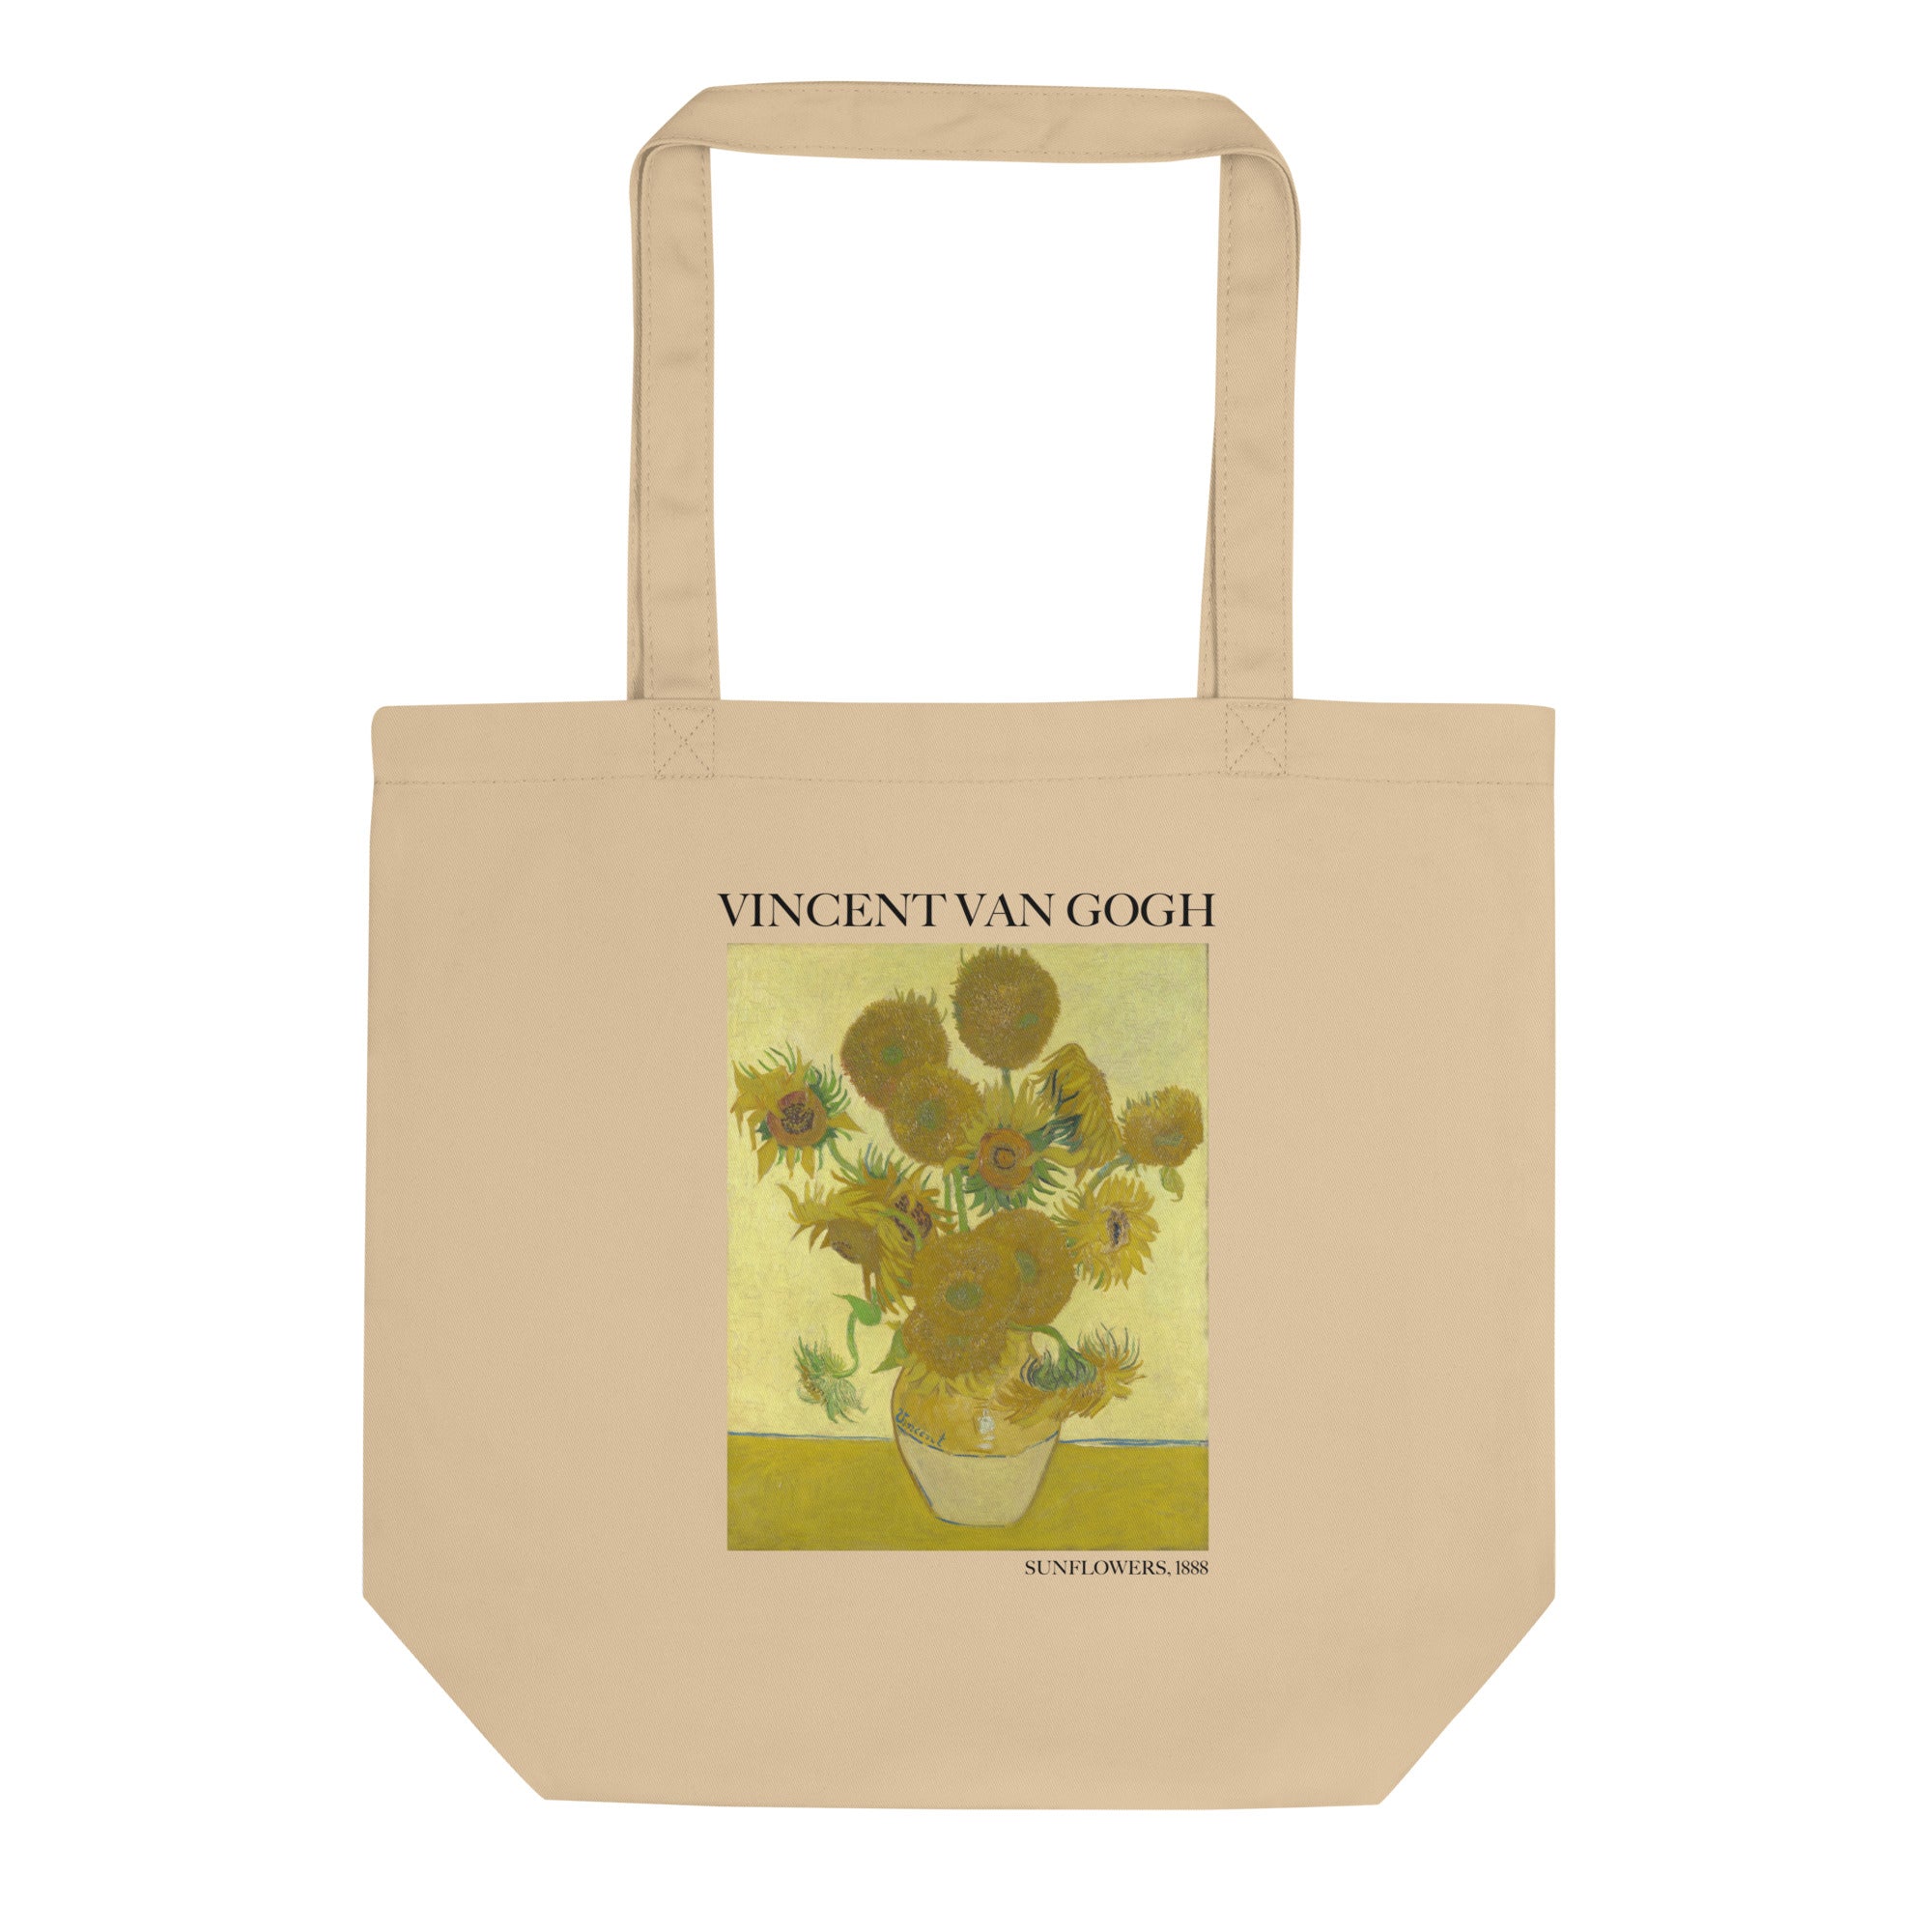 Vincent van Gogh 'Sunflowers' Famous Painting Totebag | Eco Friendly Art Tote Bag